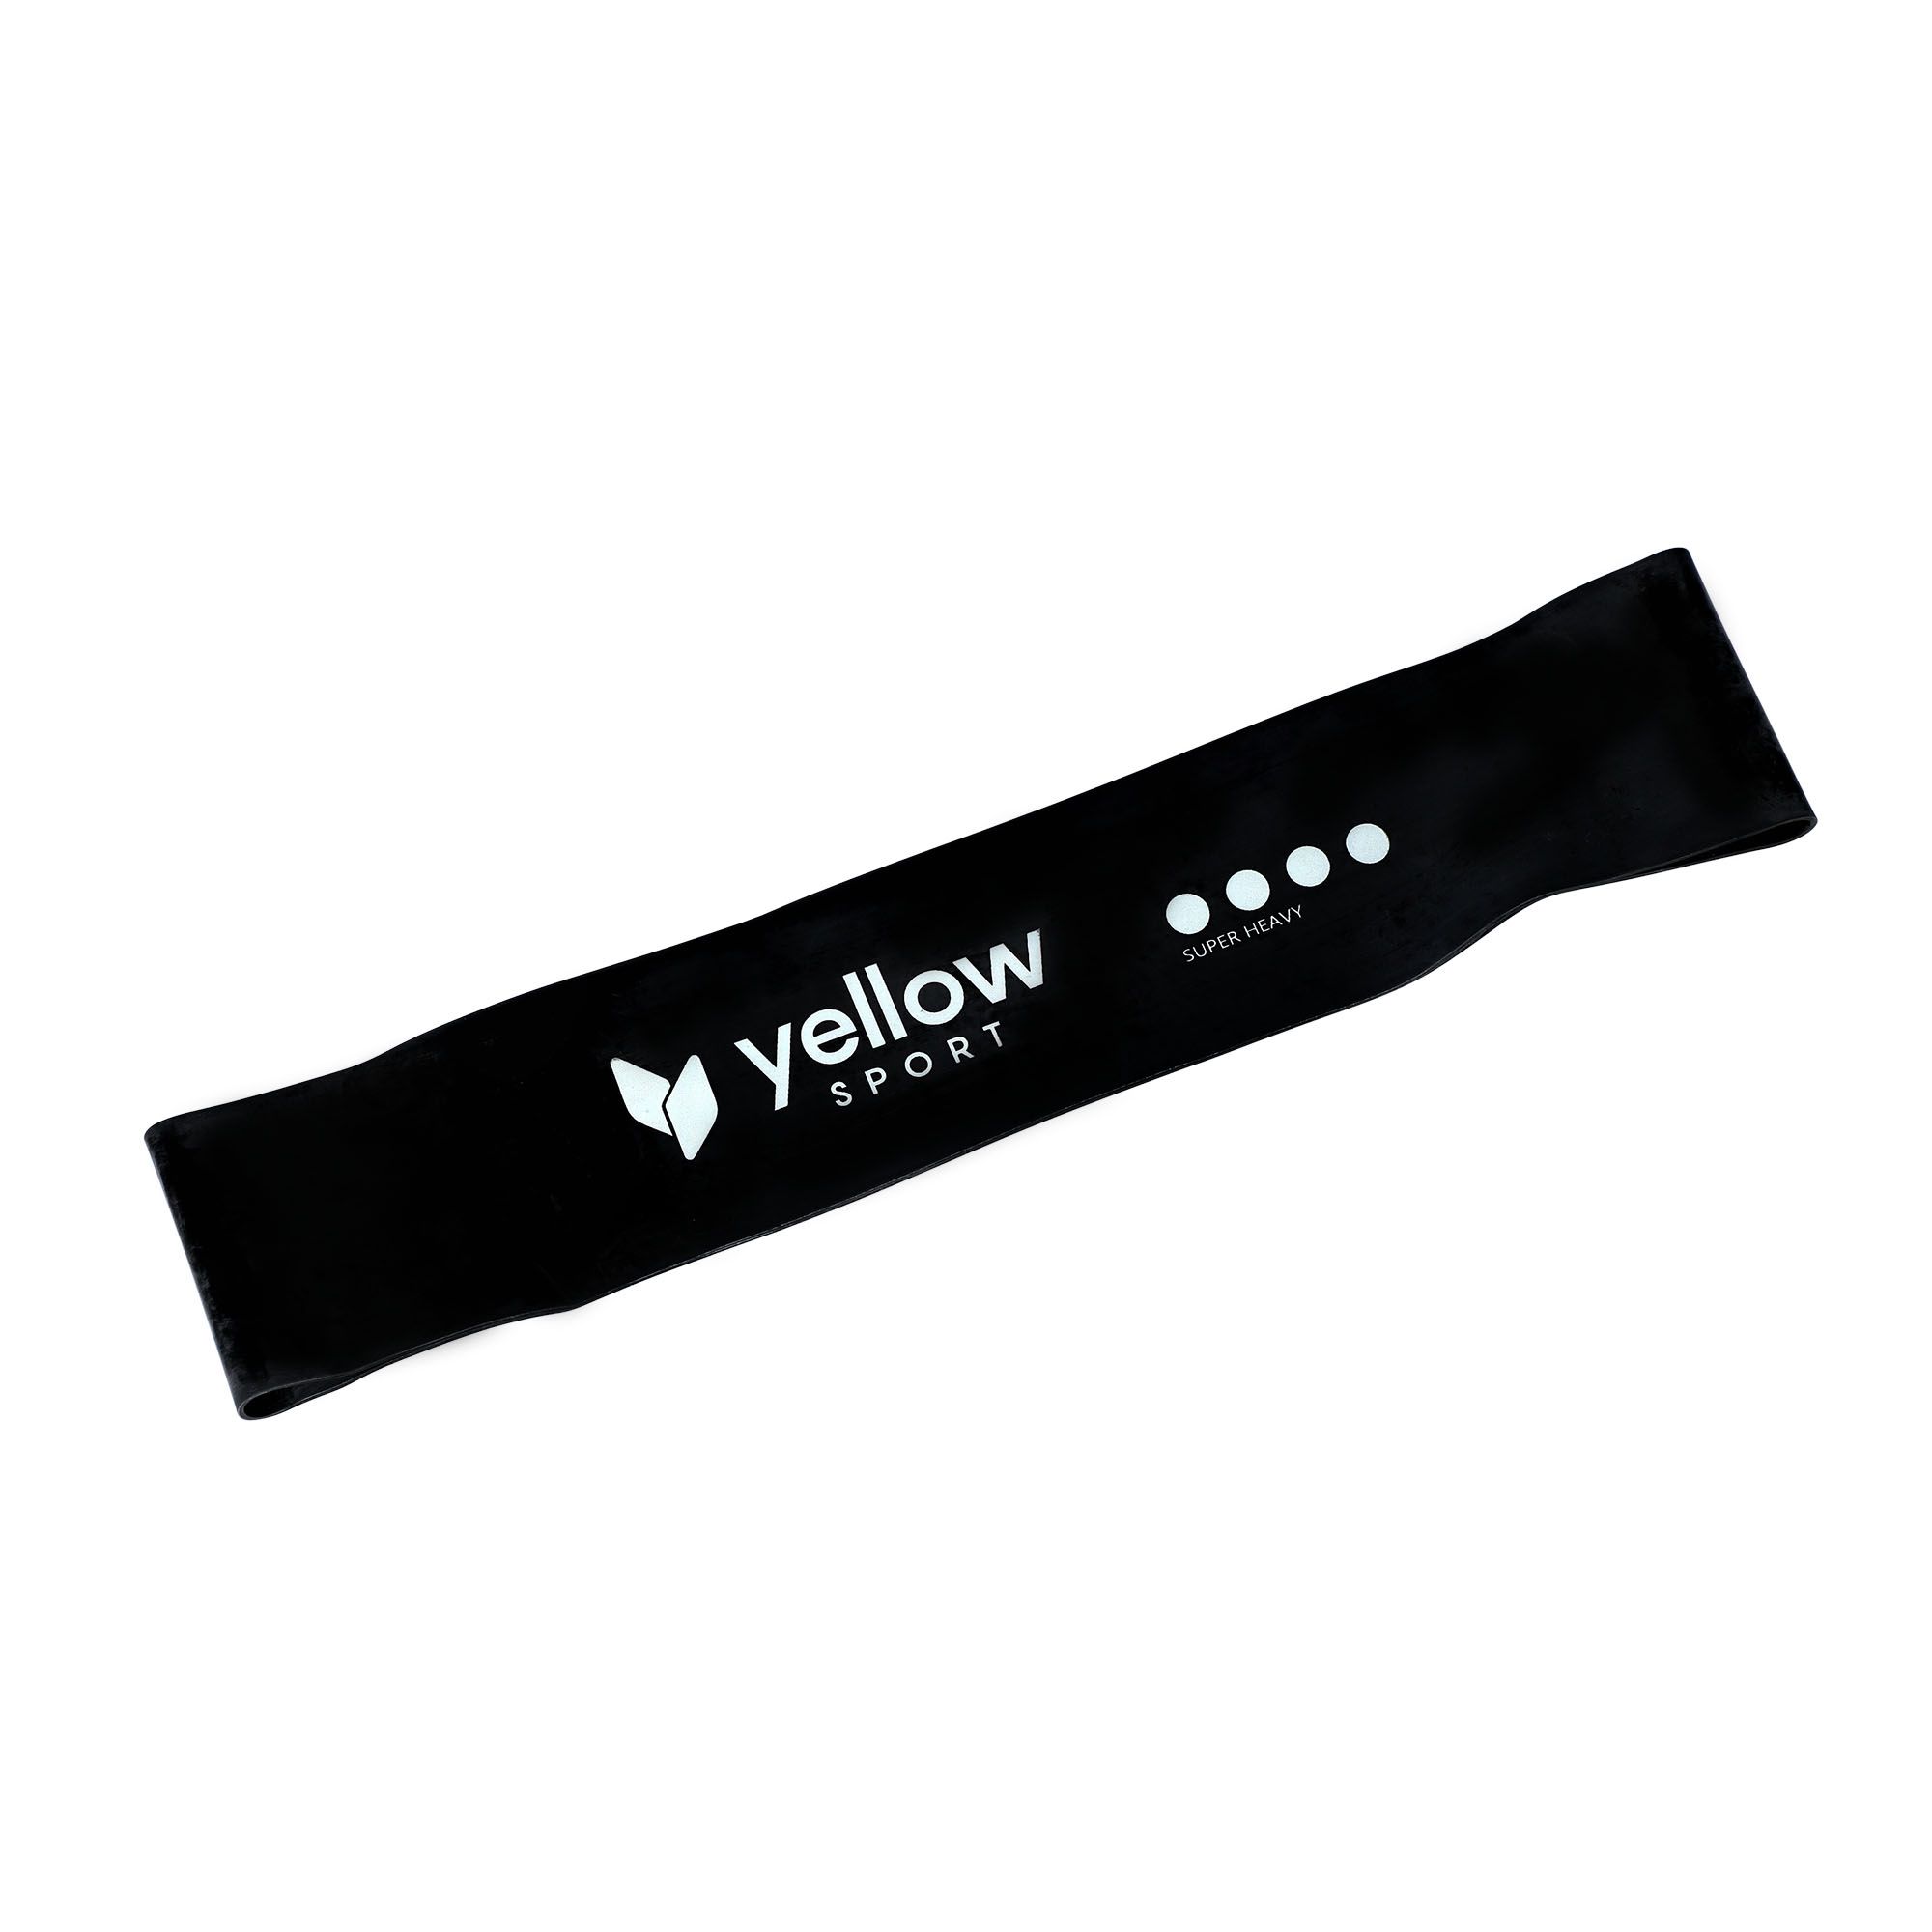 Guma do ćwiczeń yellowLOOP Band - czarna, opór 15-20kg